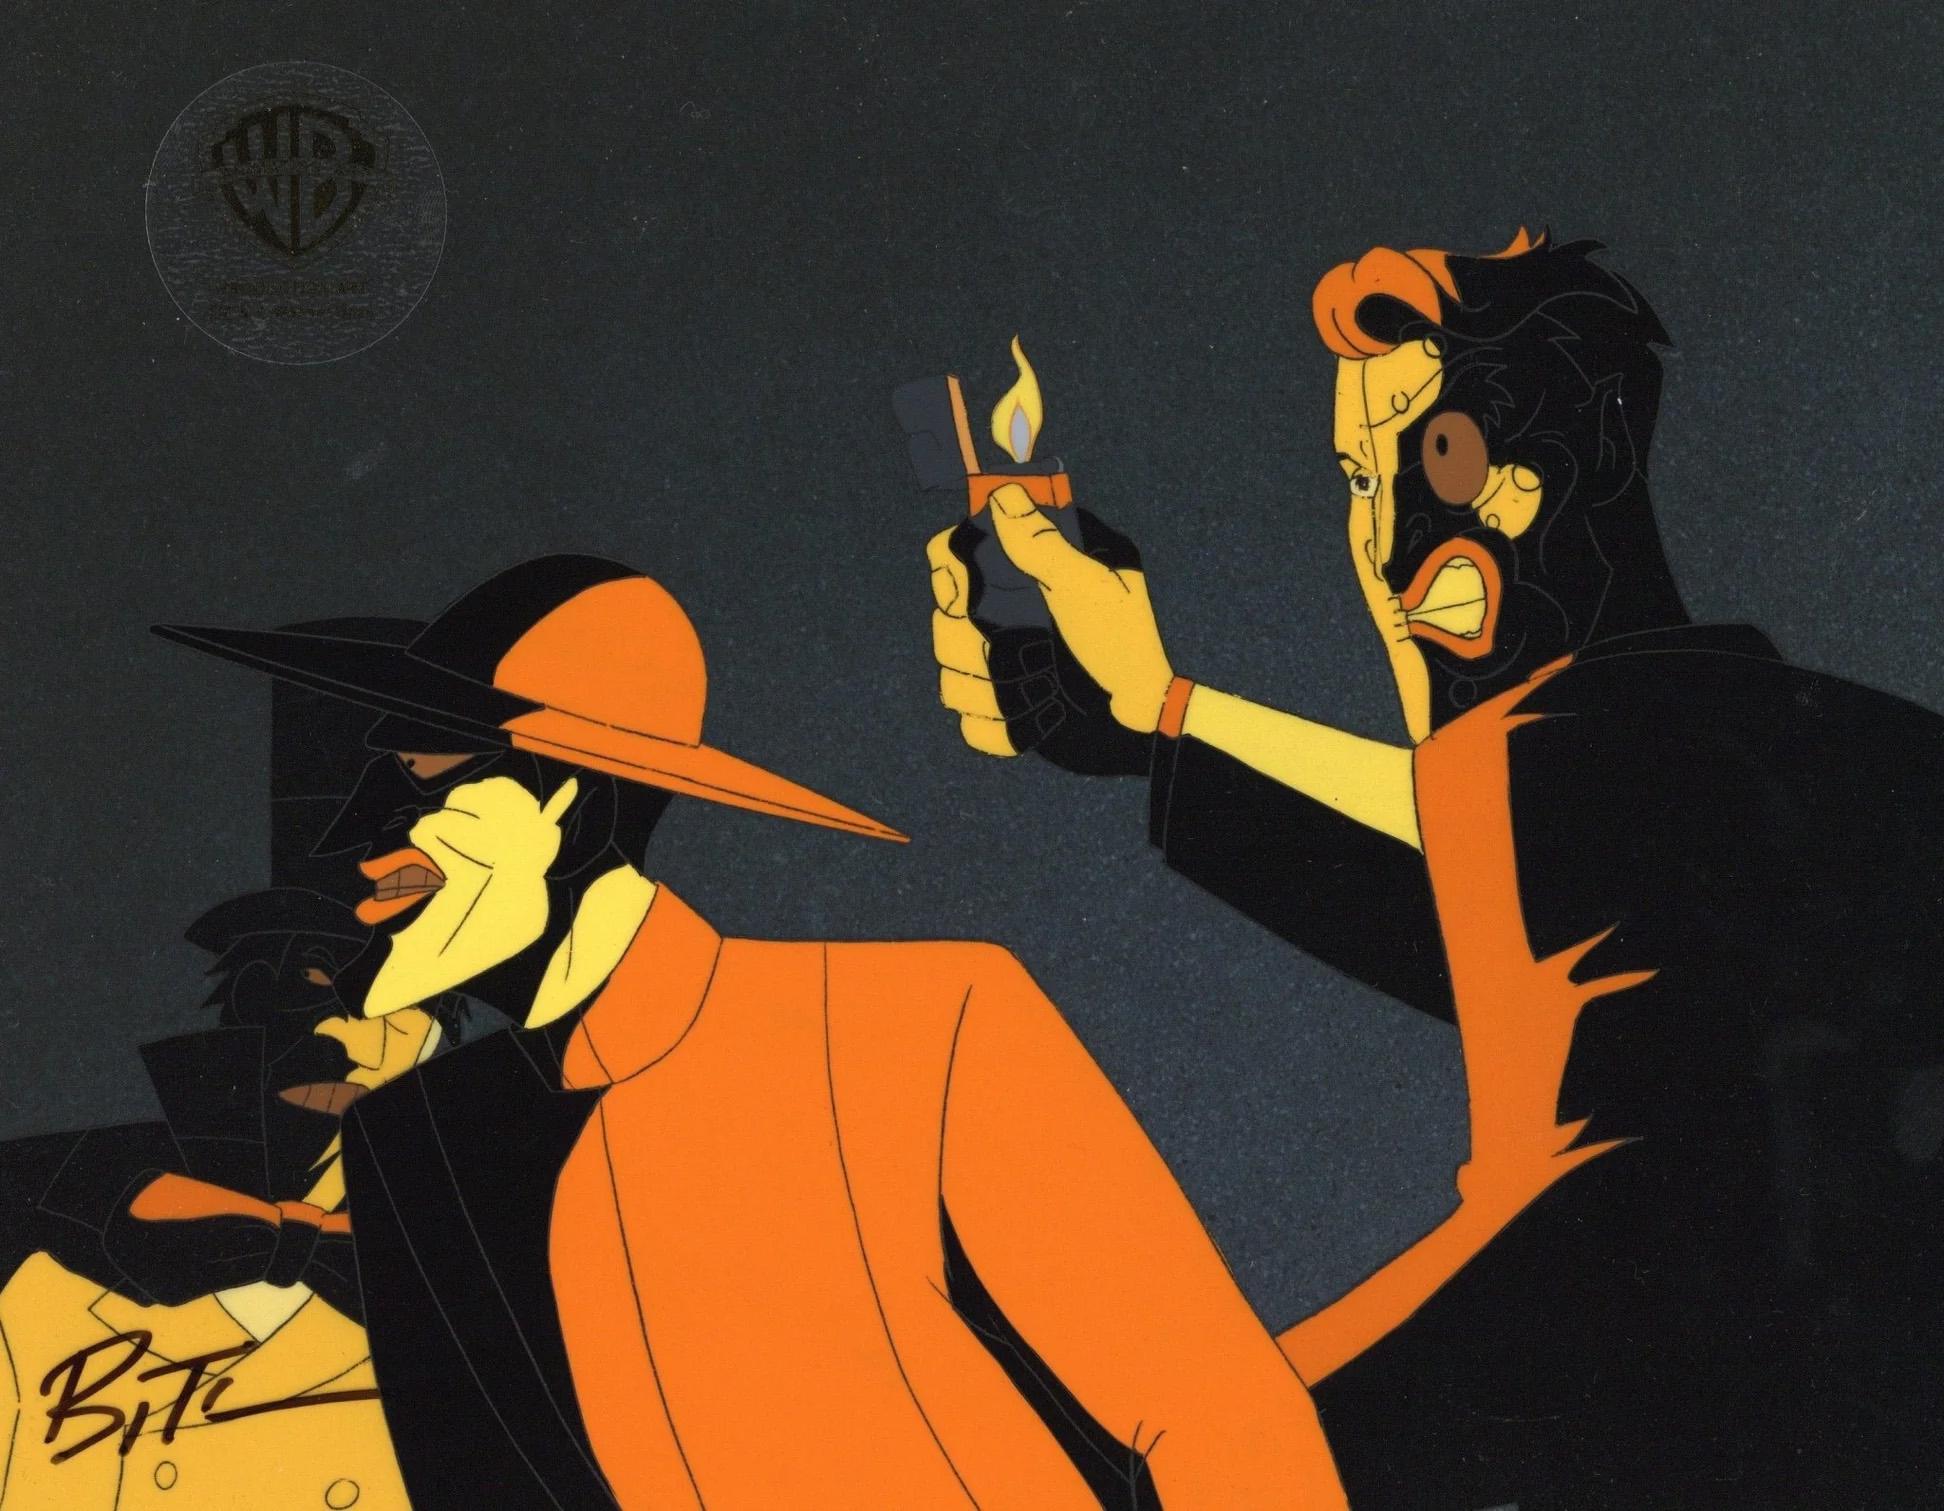 Batman The Animated Series Original Cel Signed by Bruce Timm: Batman's Rogues - Art by DC Comics Studio Artists